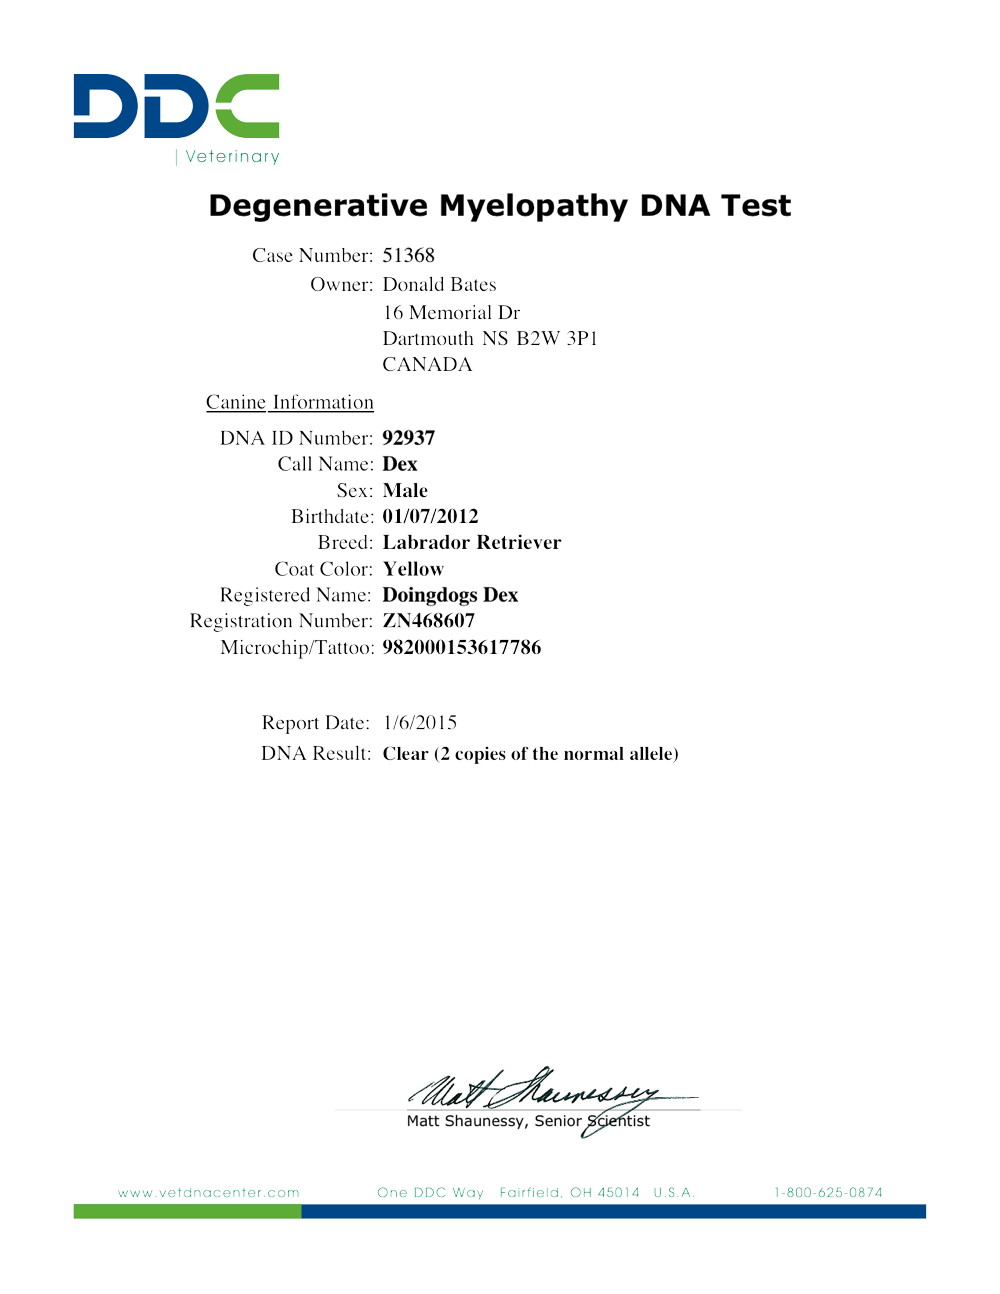 Dex's Degenerative Myelopathy DNA Test